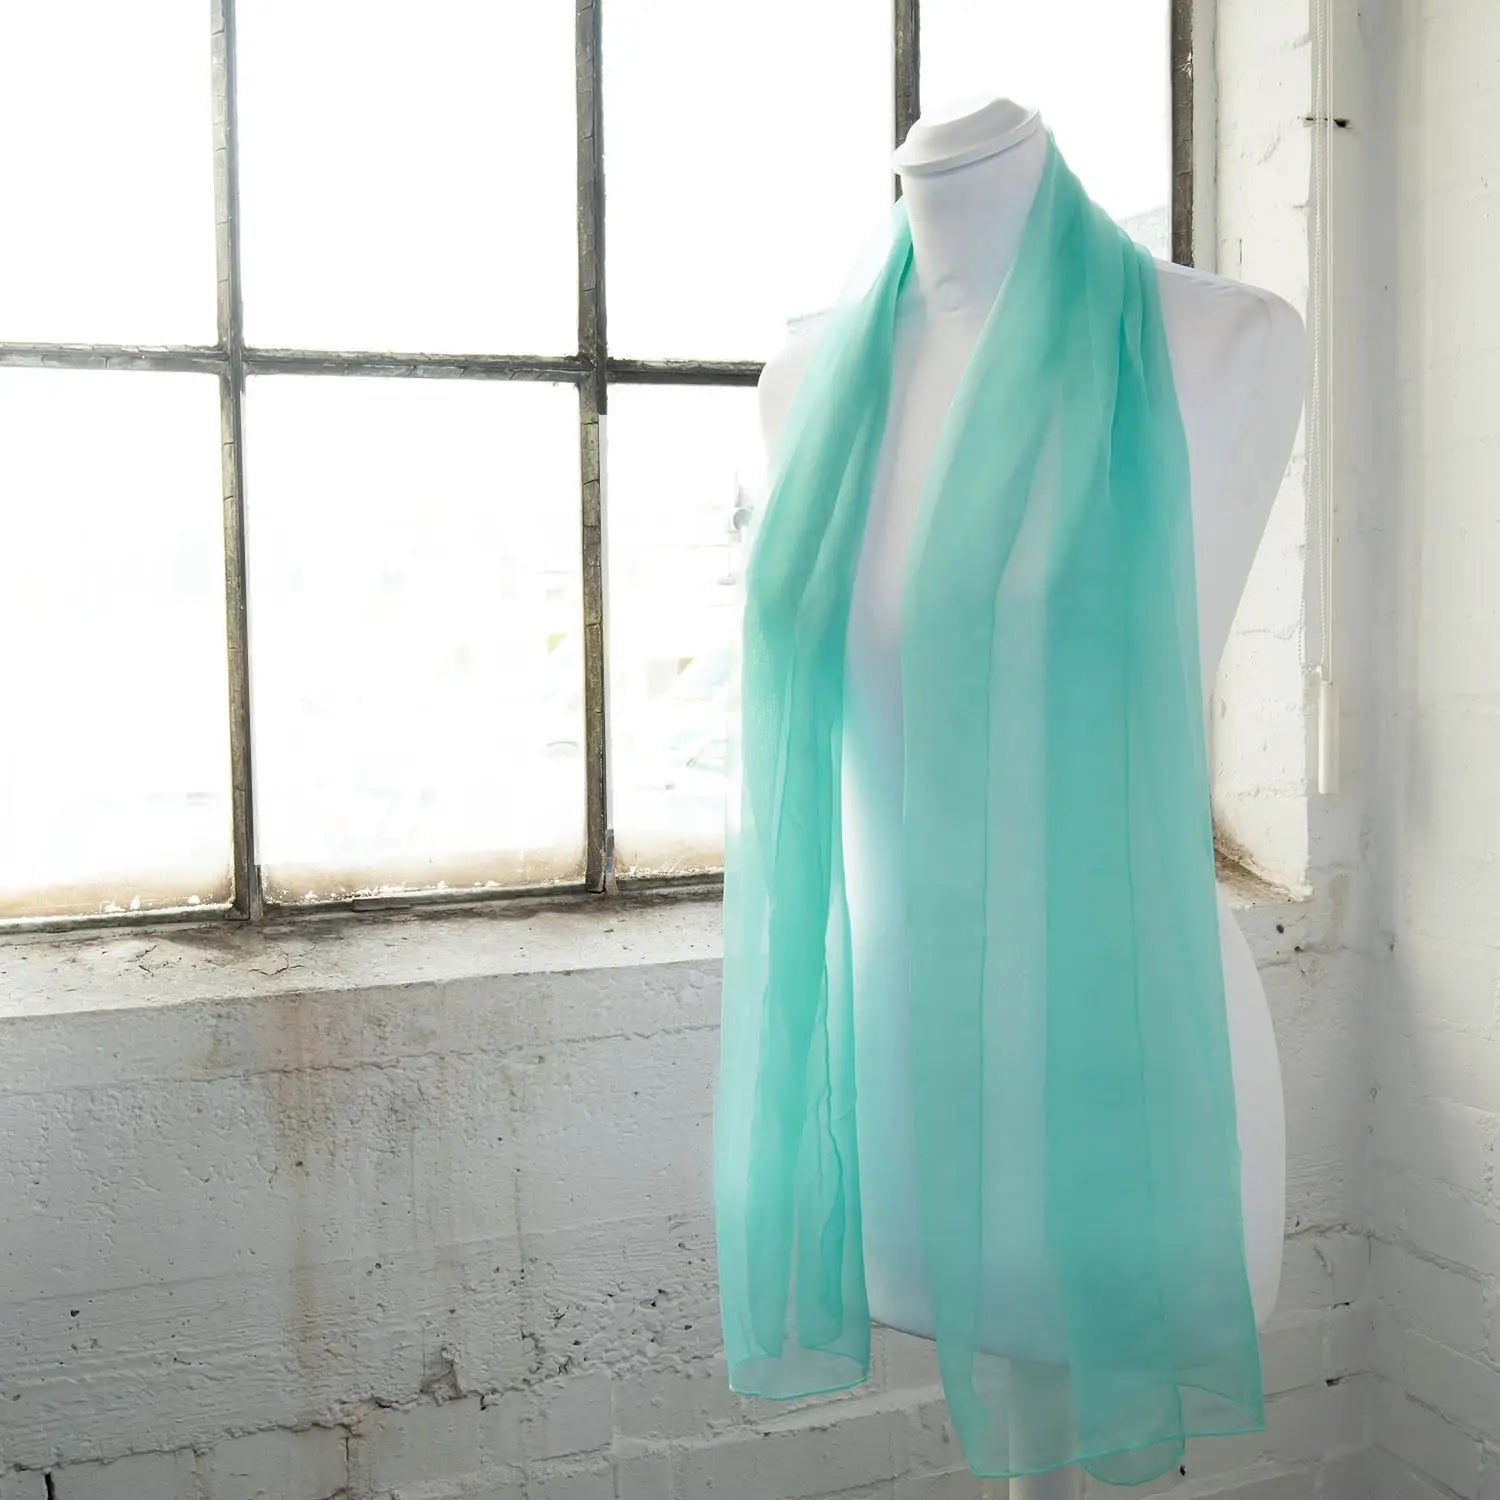 Green chiffon scarf hanging on mannequin - Classic plain design